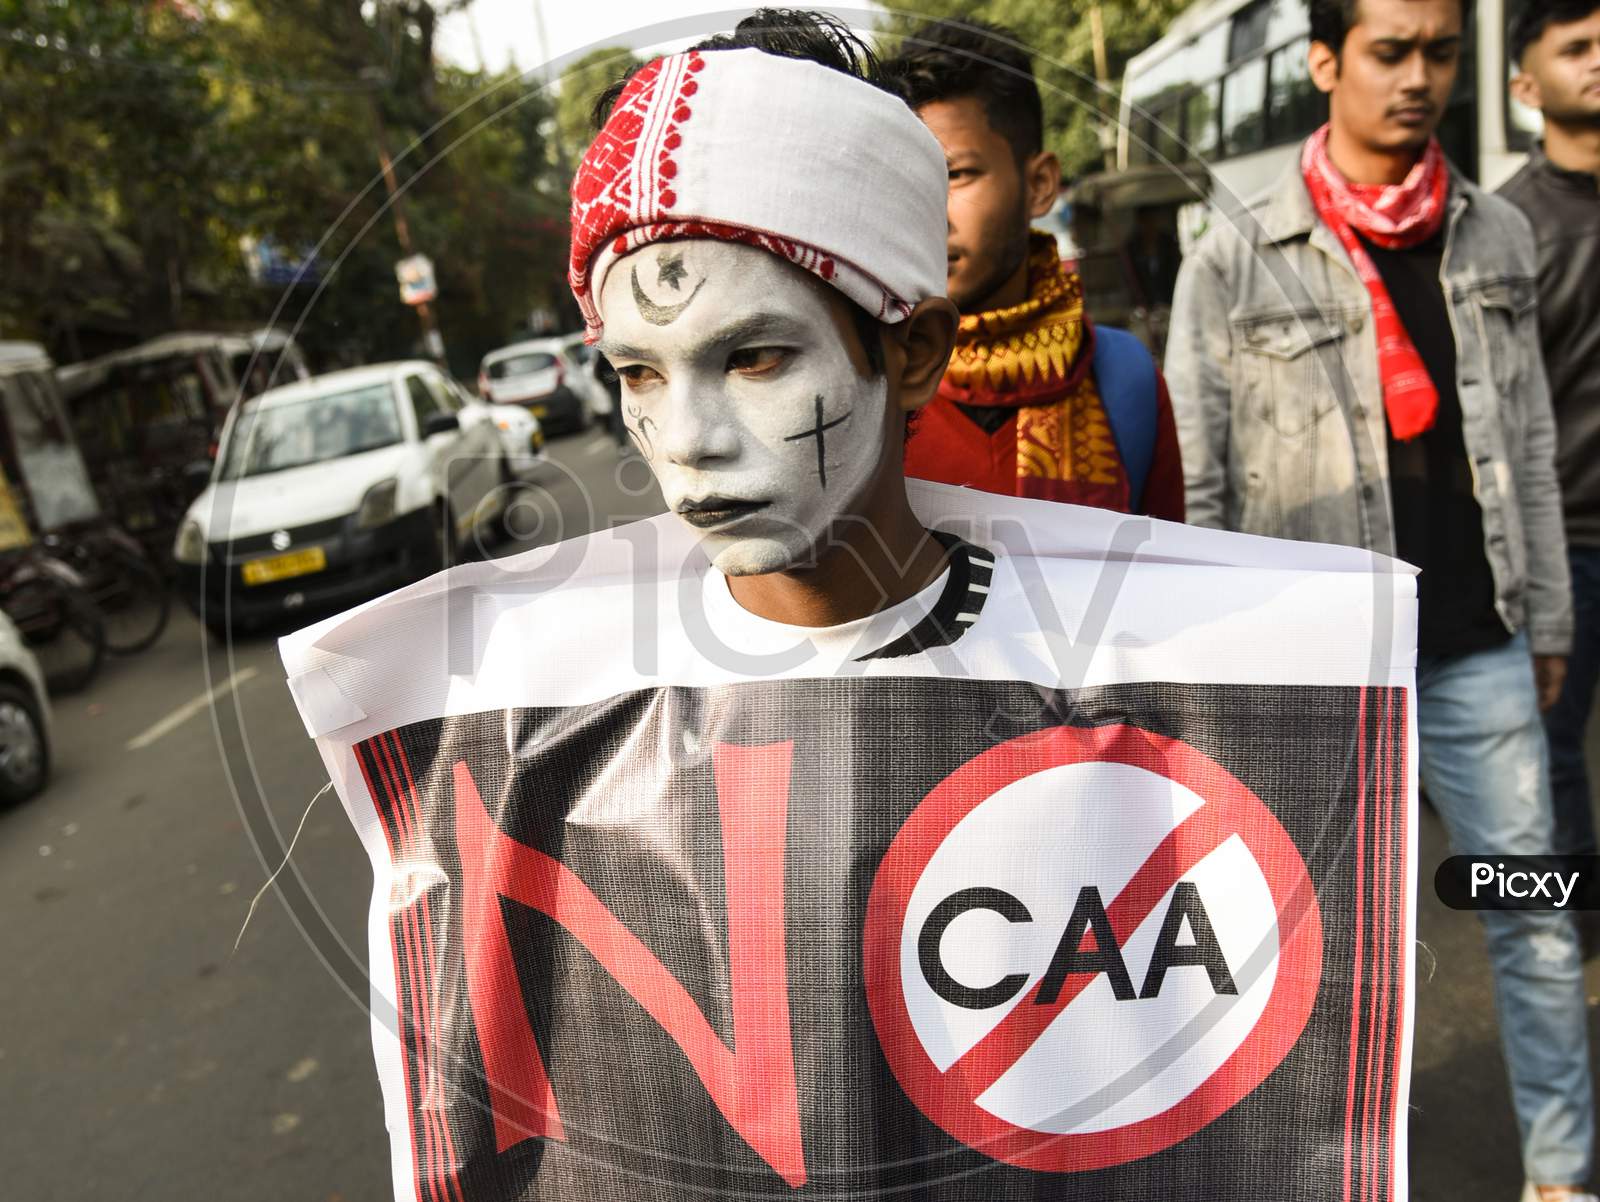 A Protester In an Getup Against CAA And CAB Amendment Bill In Guwahati, Assam